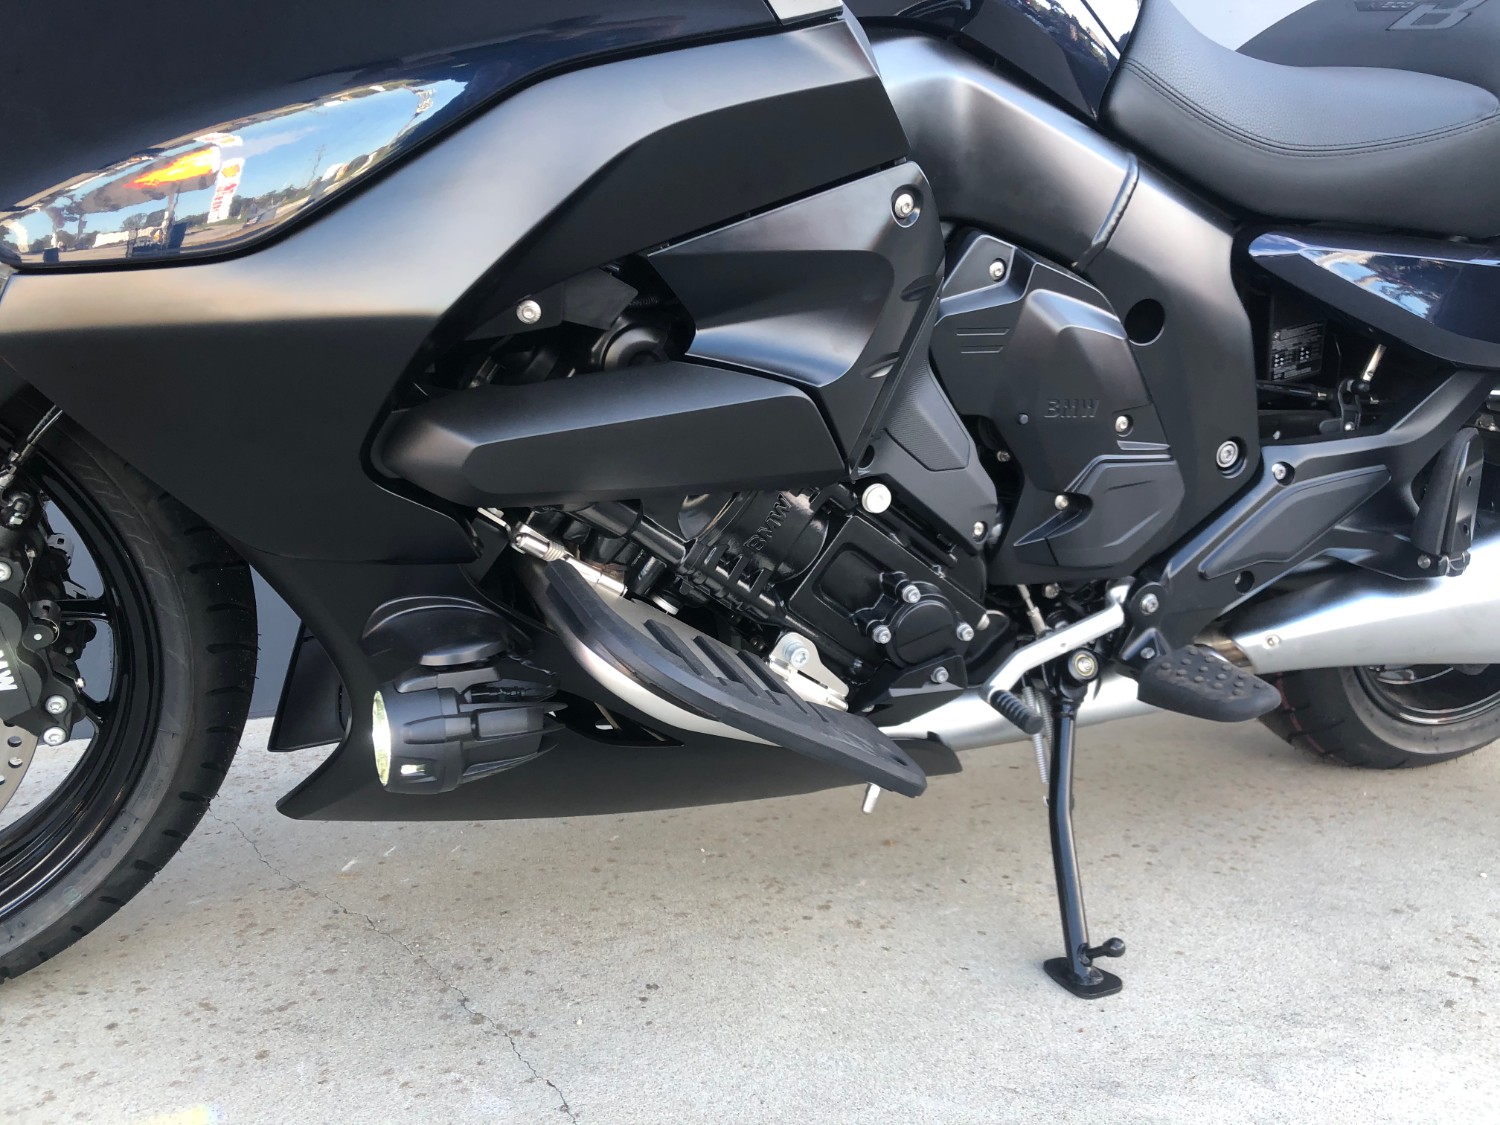 2019 BMW K1600 B Deluxe Motorcycle Image 11